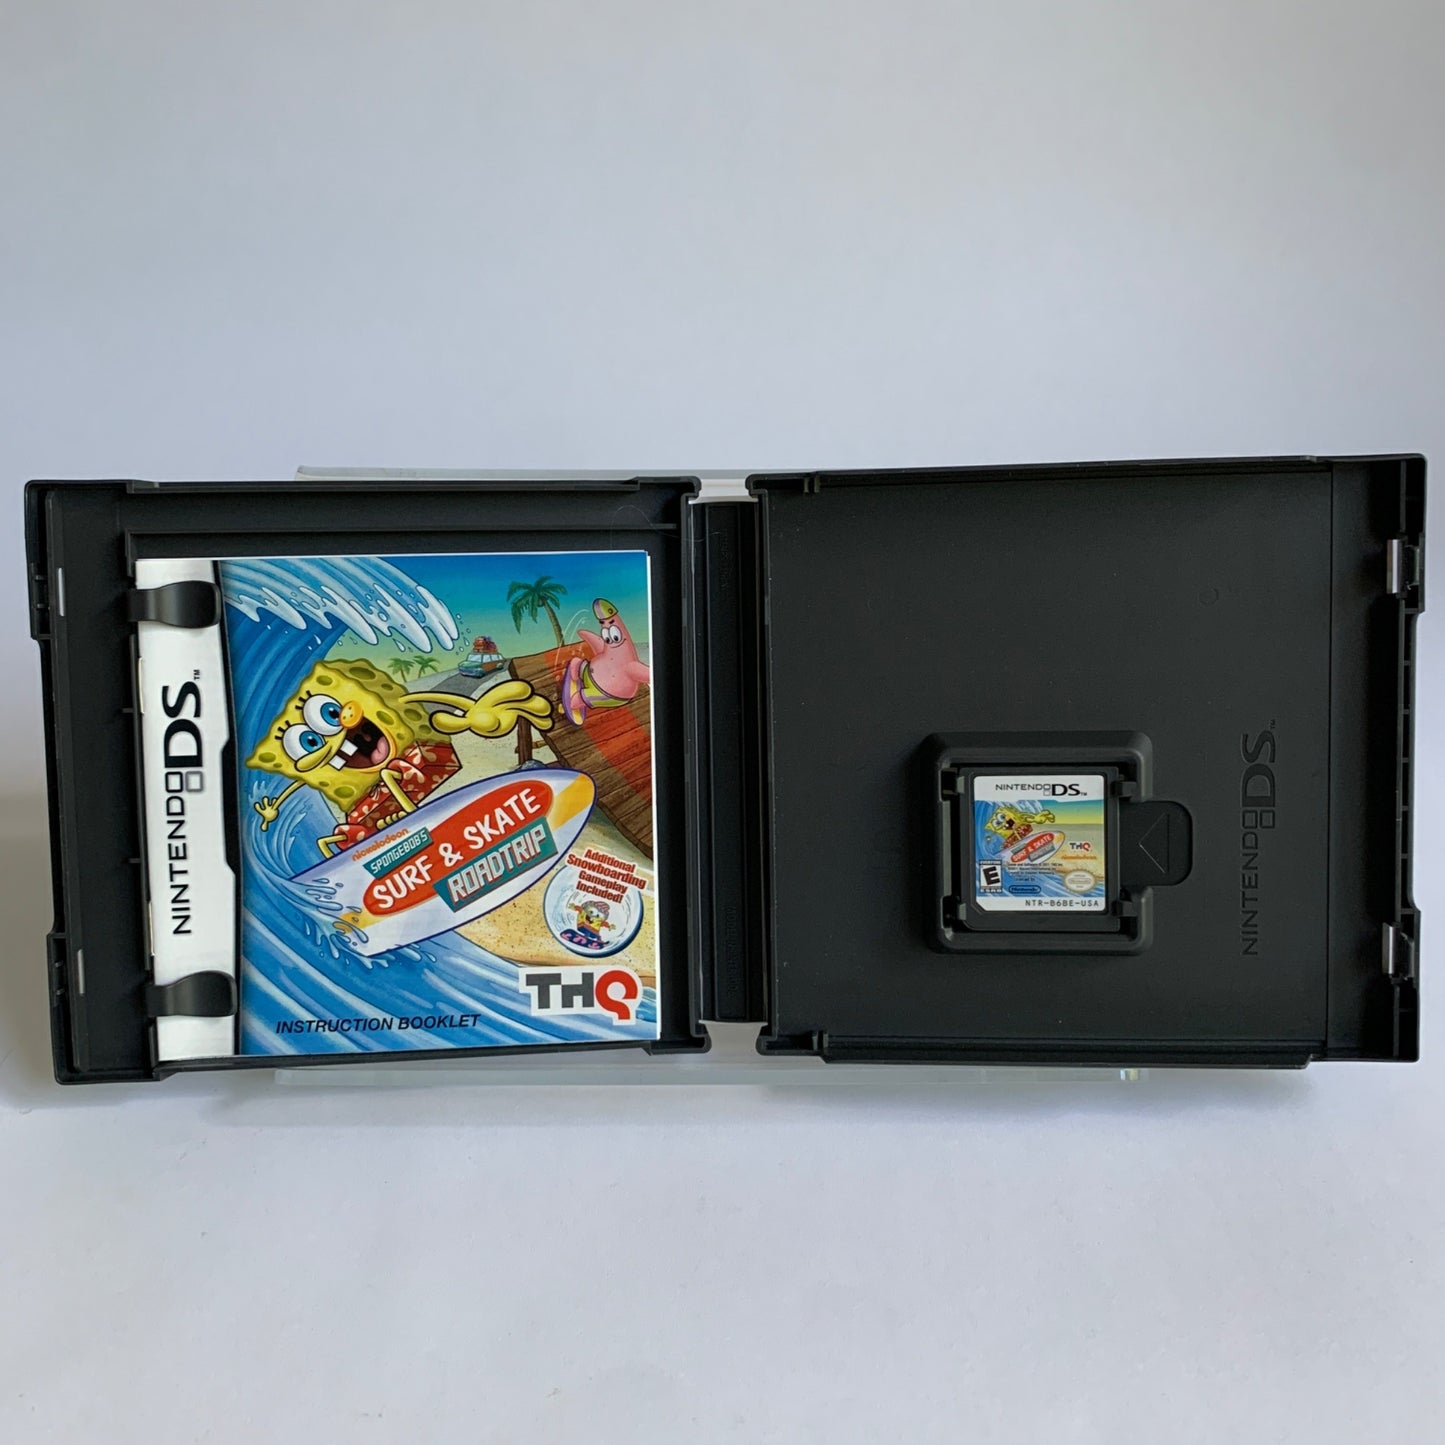 Nintendo DS Spongebob's Surf & Skate Roadtrip Cartridge Case Manual COMPLETE